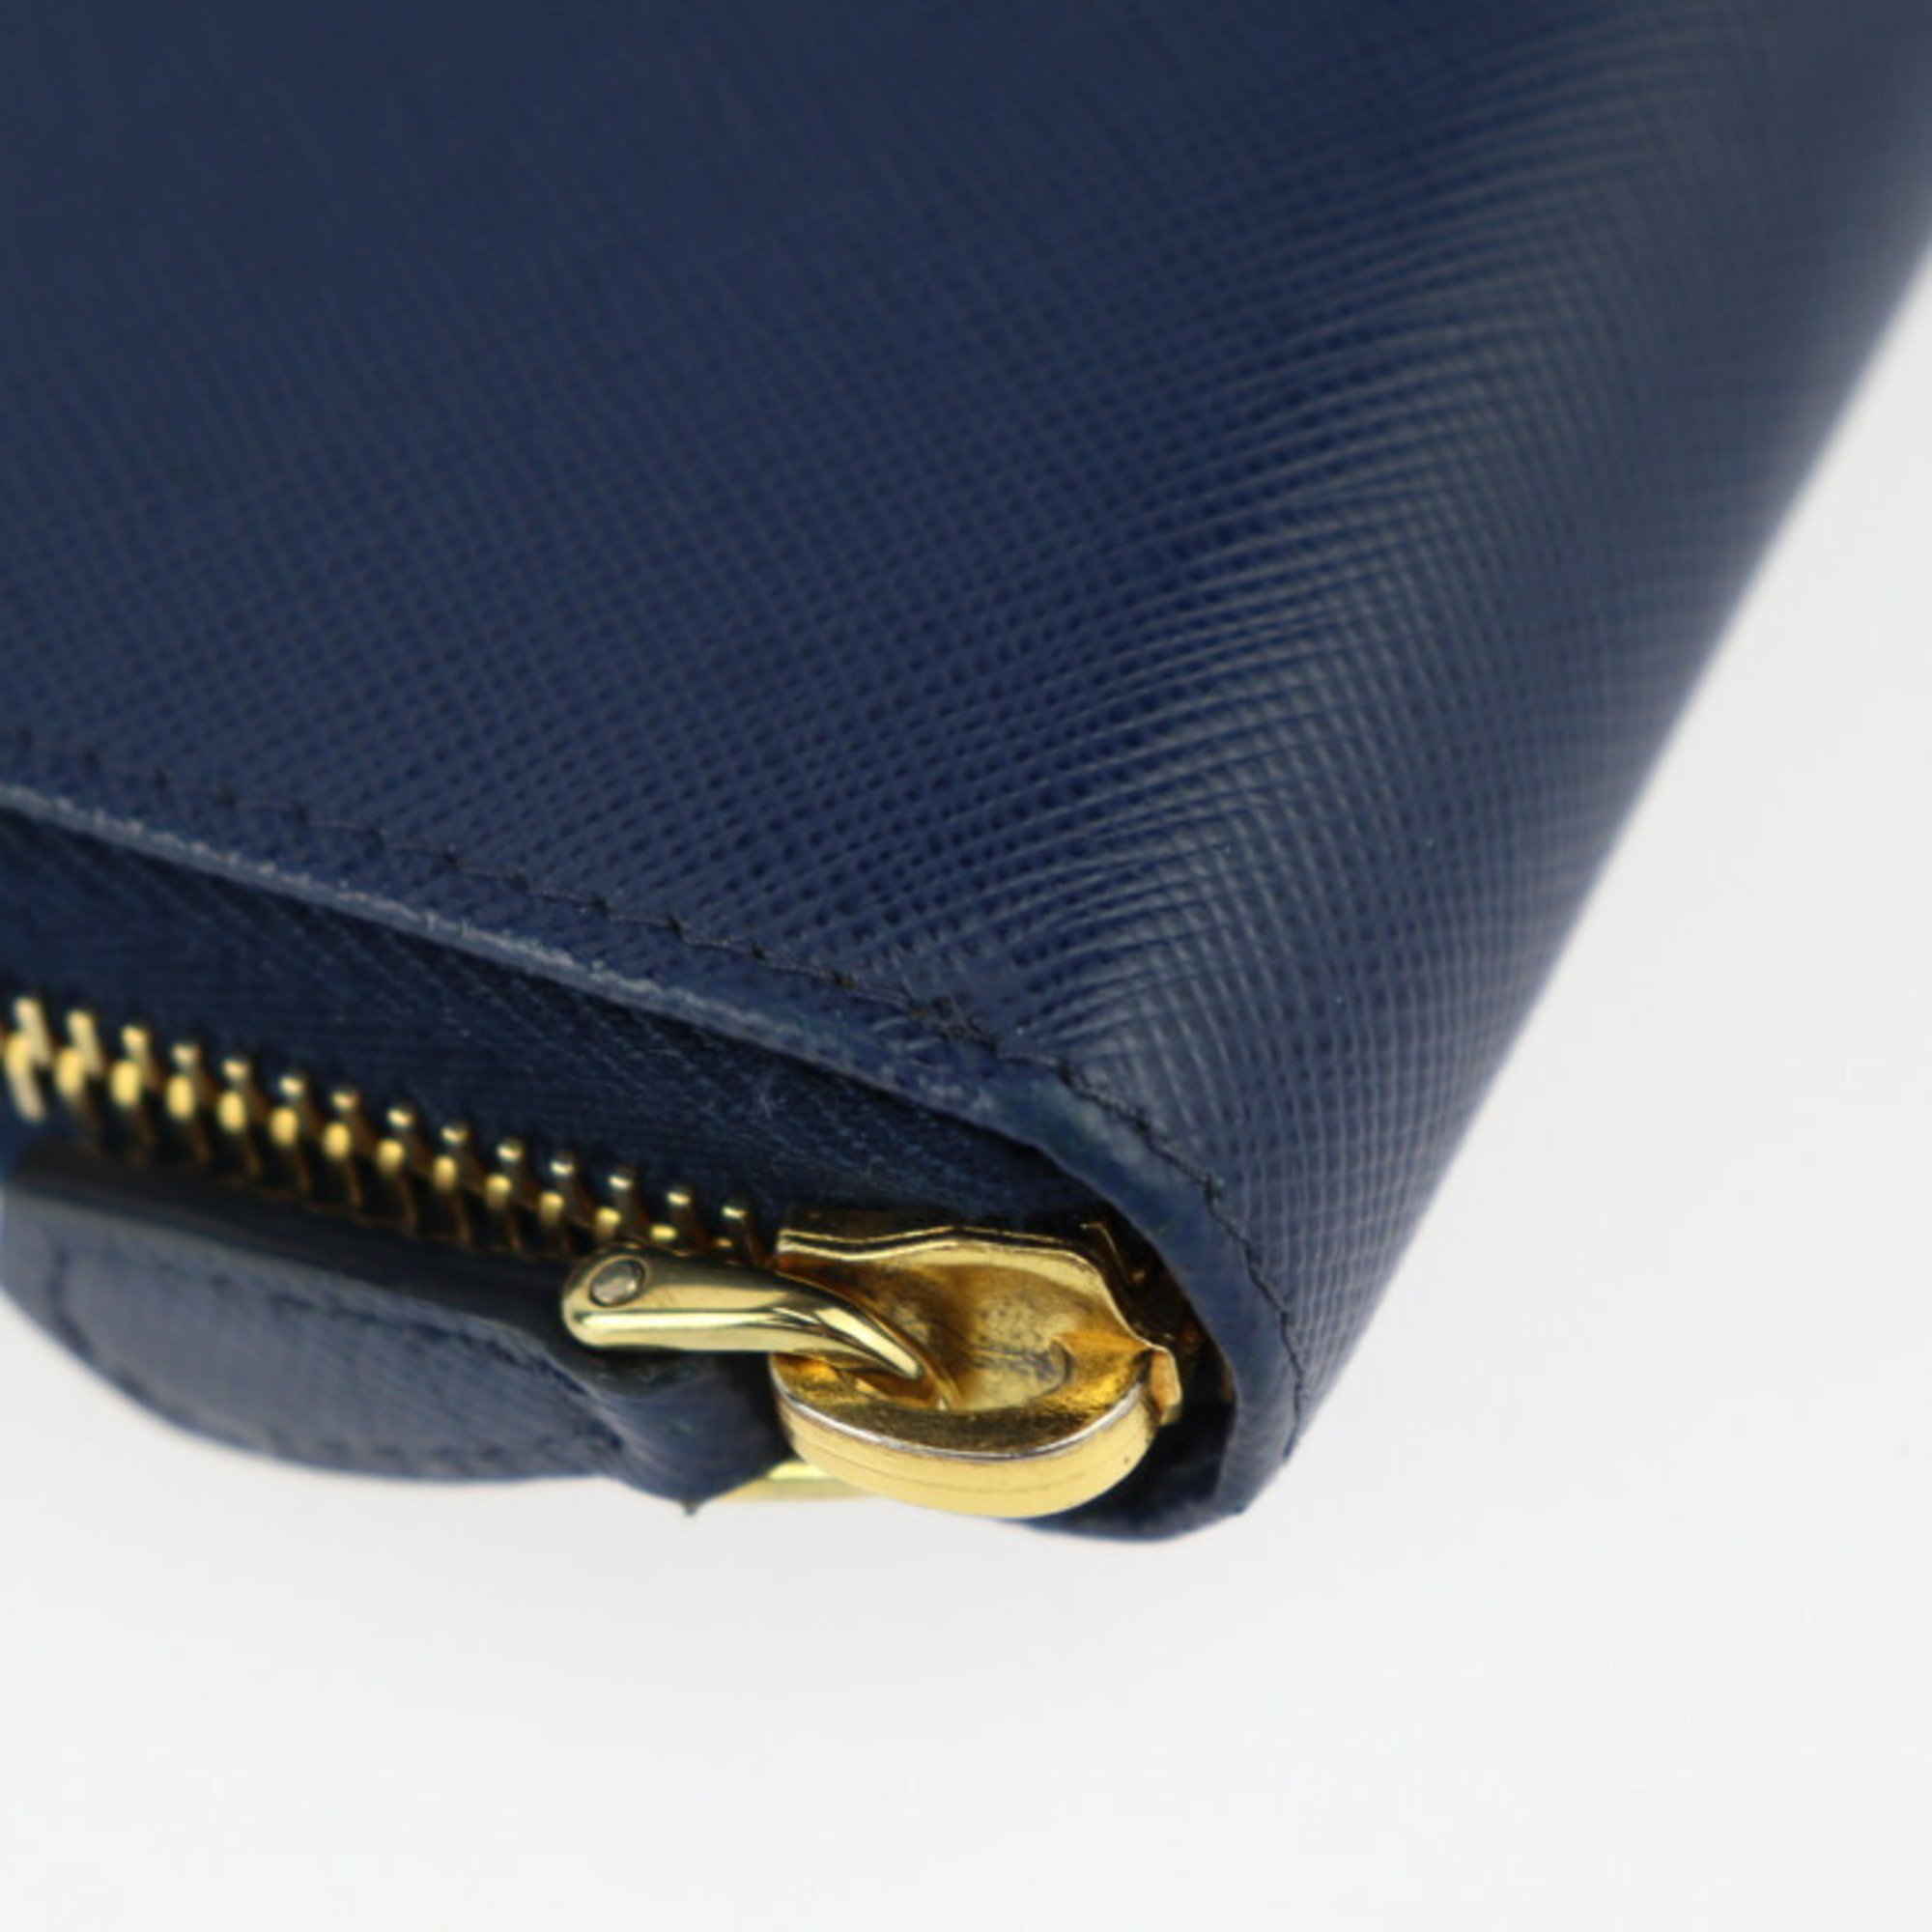 PRADA Prada Wallet Long 1ML506 Saffiano Leather Blue Round